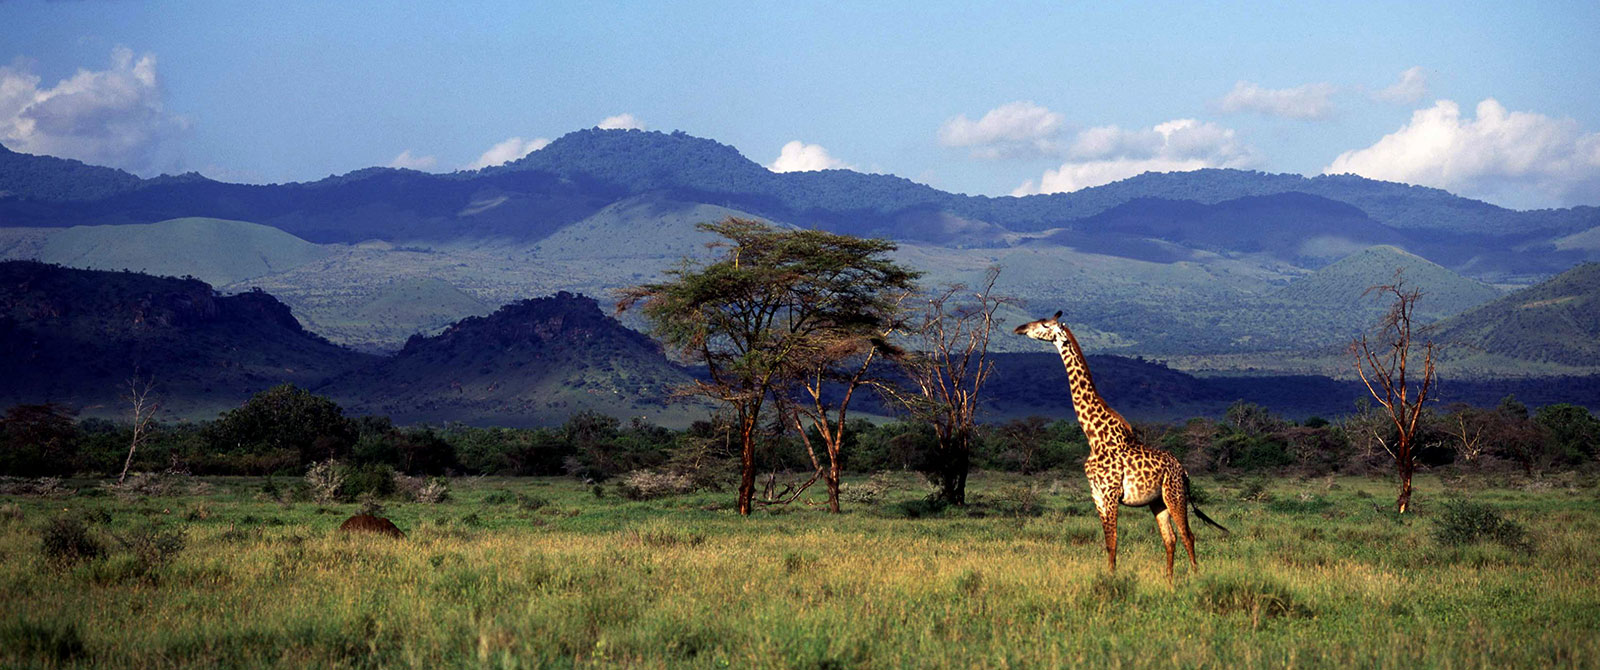 Chyulu Hills, Kenya - African Safari Travel Guide